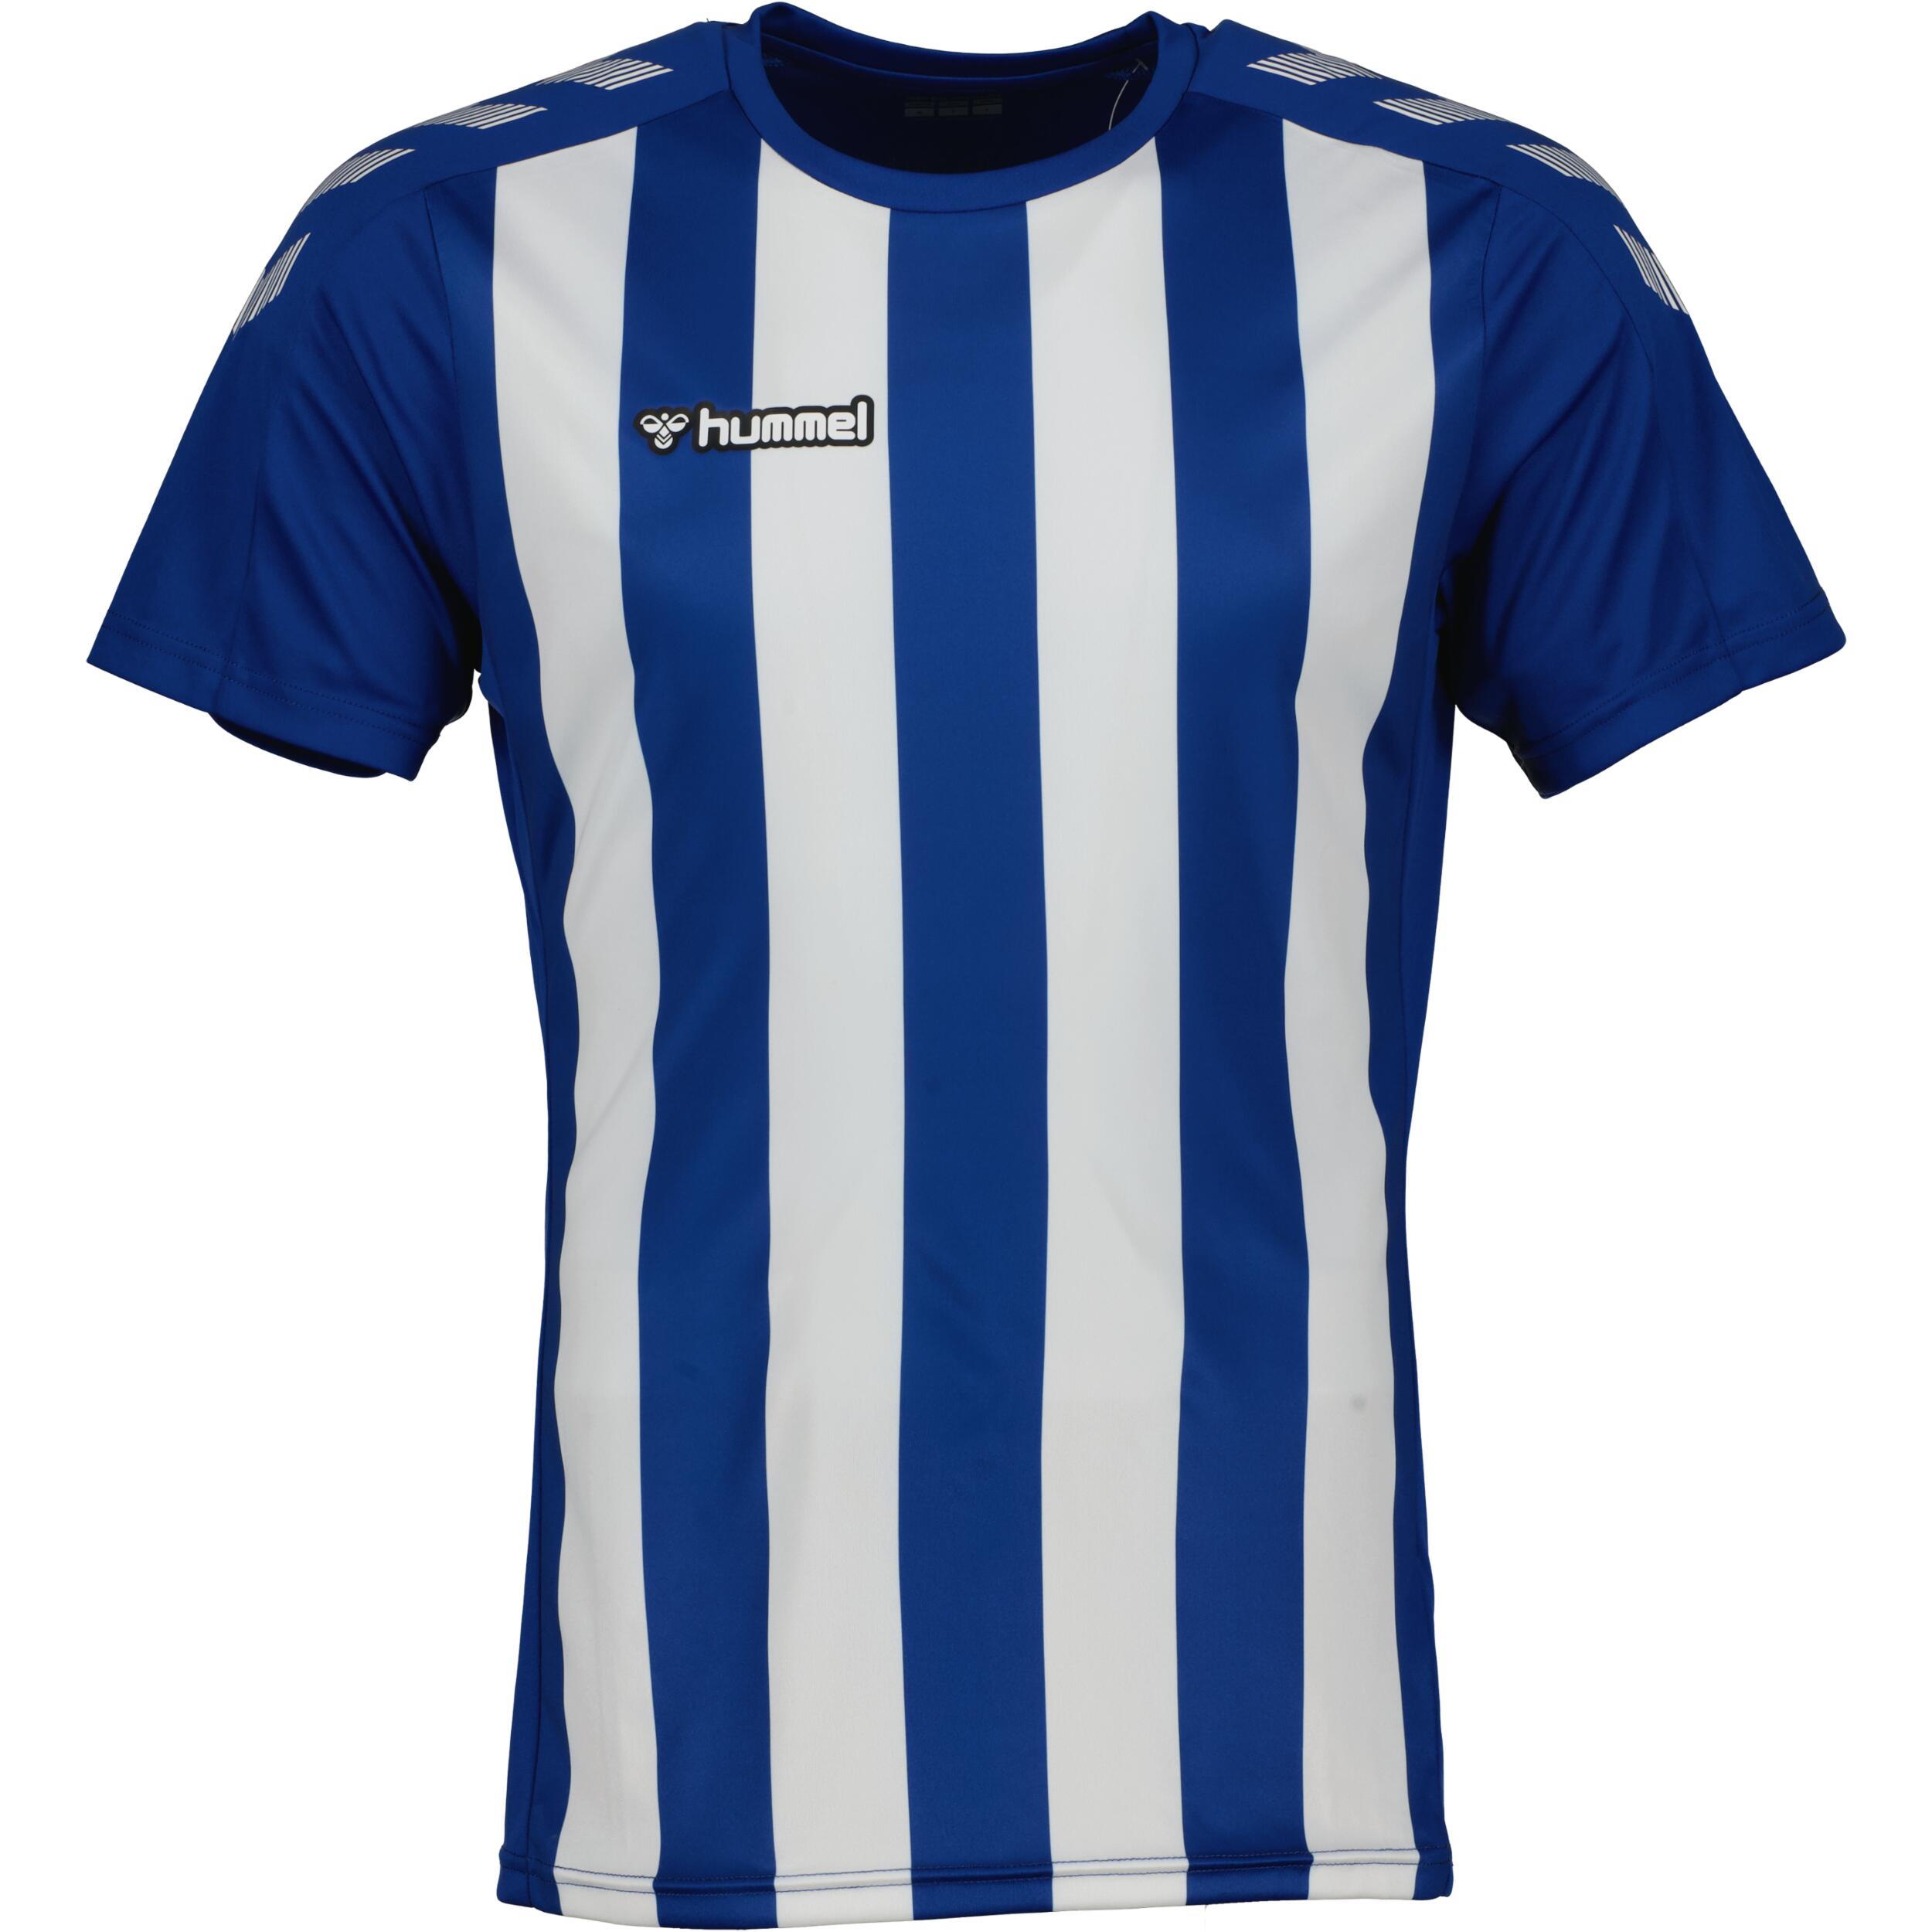 Stripe jersey for men, great for football, in true blue/white 1/3